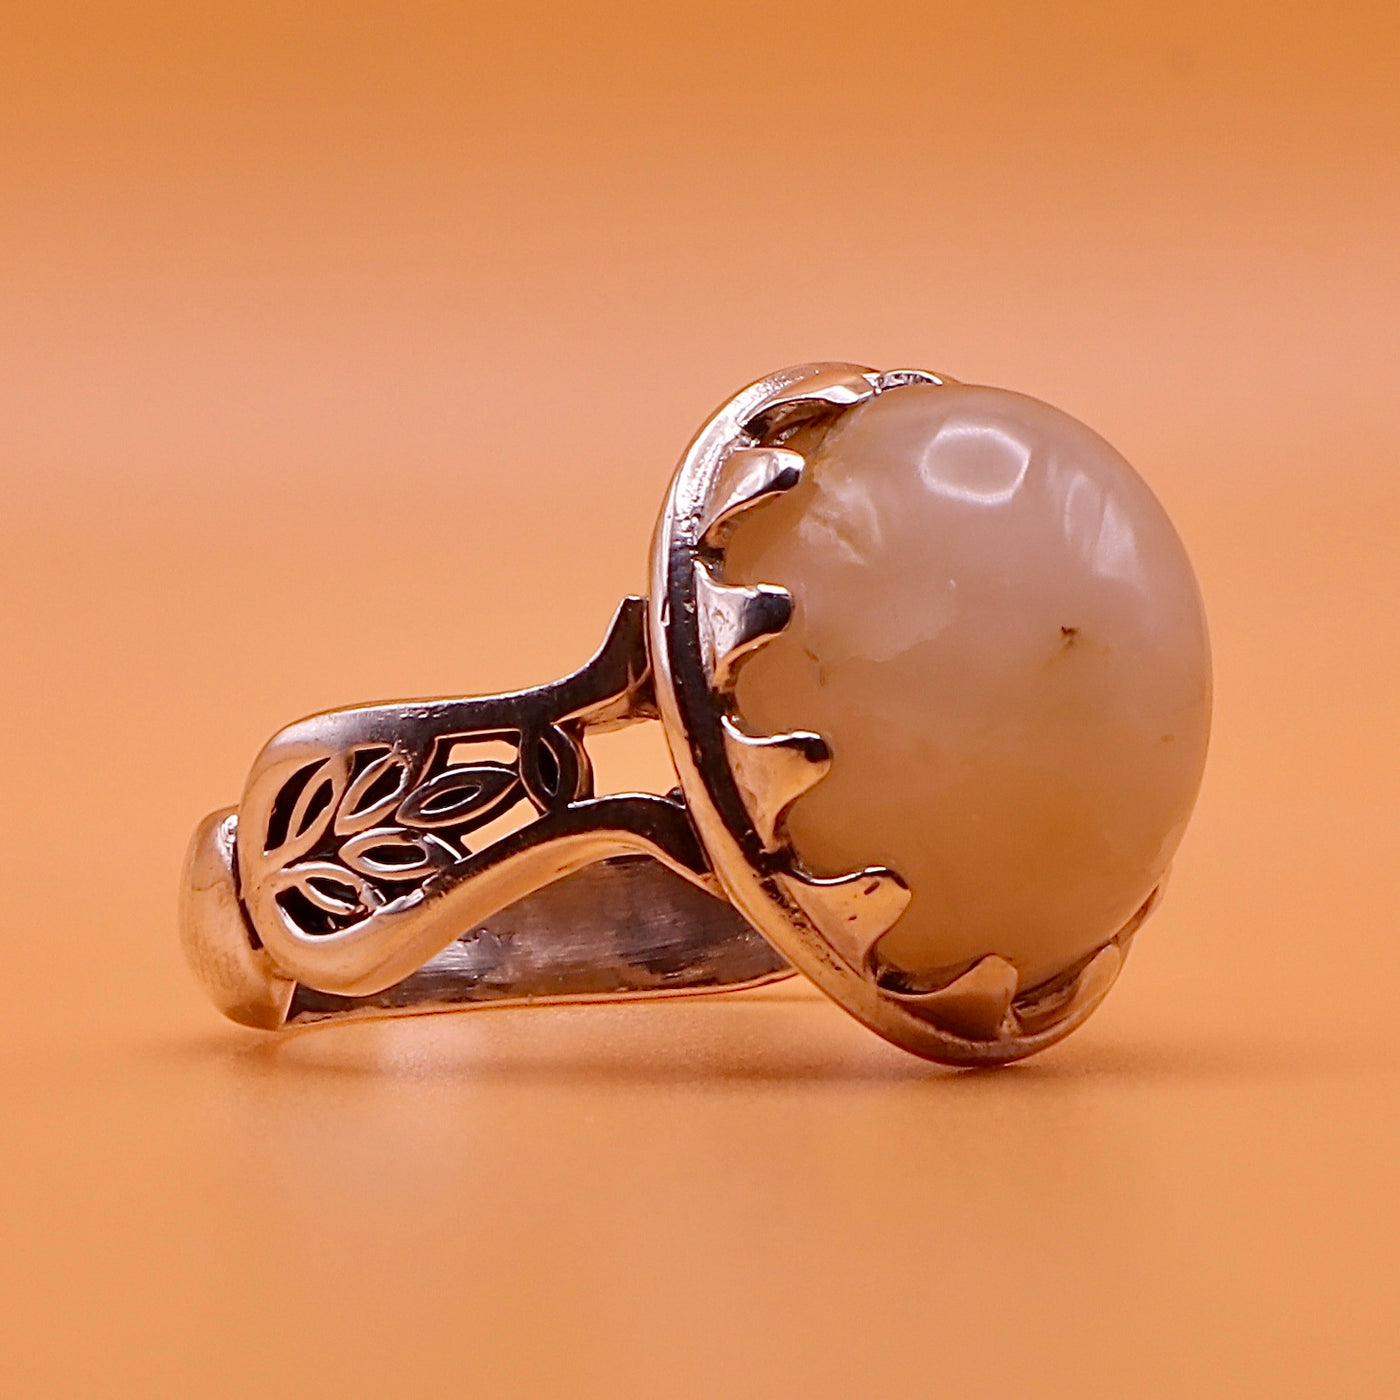 Rare Dur e Najaf Ring Silver | خاتم در النجف الاصلي | Genuine Dur E Najaf Stone Ring | US Size 10 - Al Ali Gems